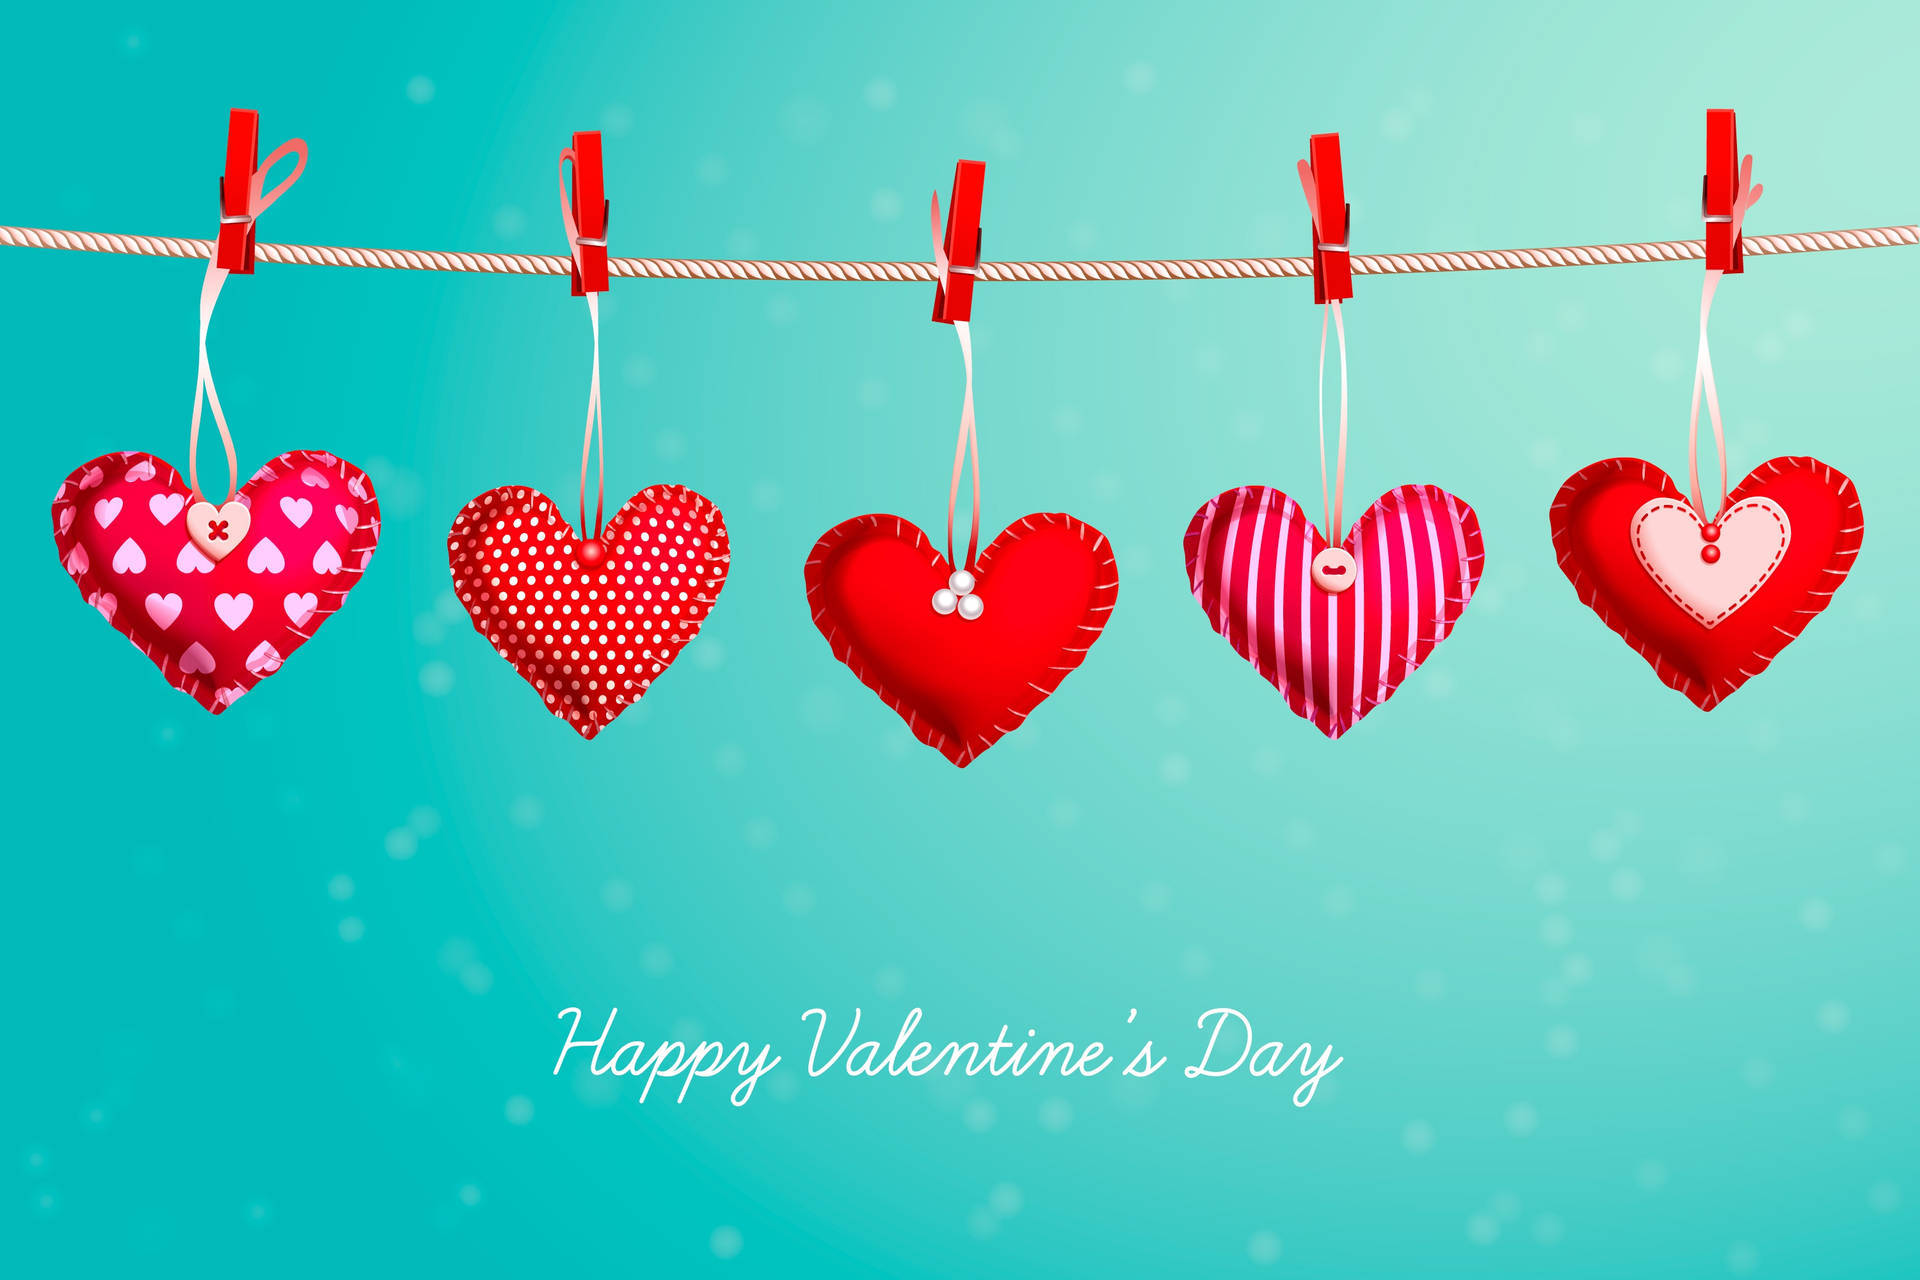 Download Valentines Day Desktop Wallpaper